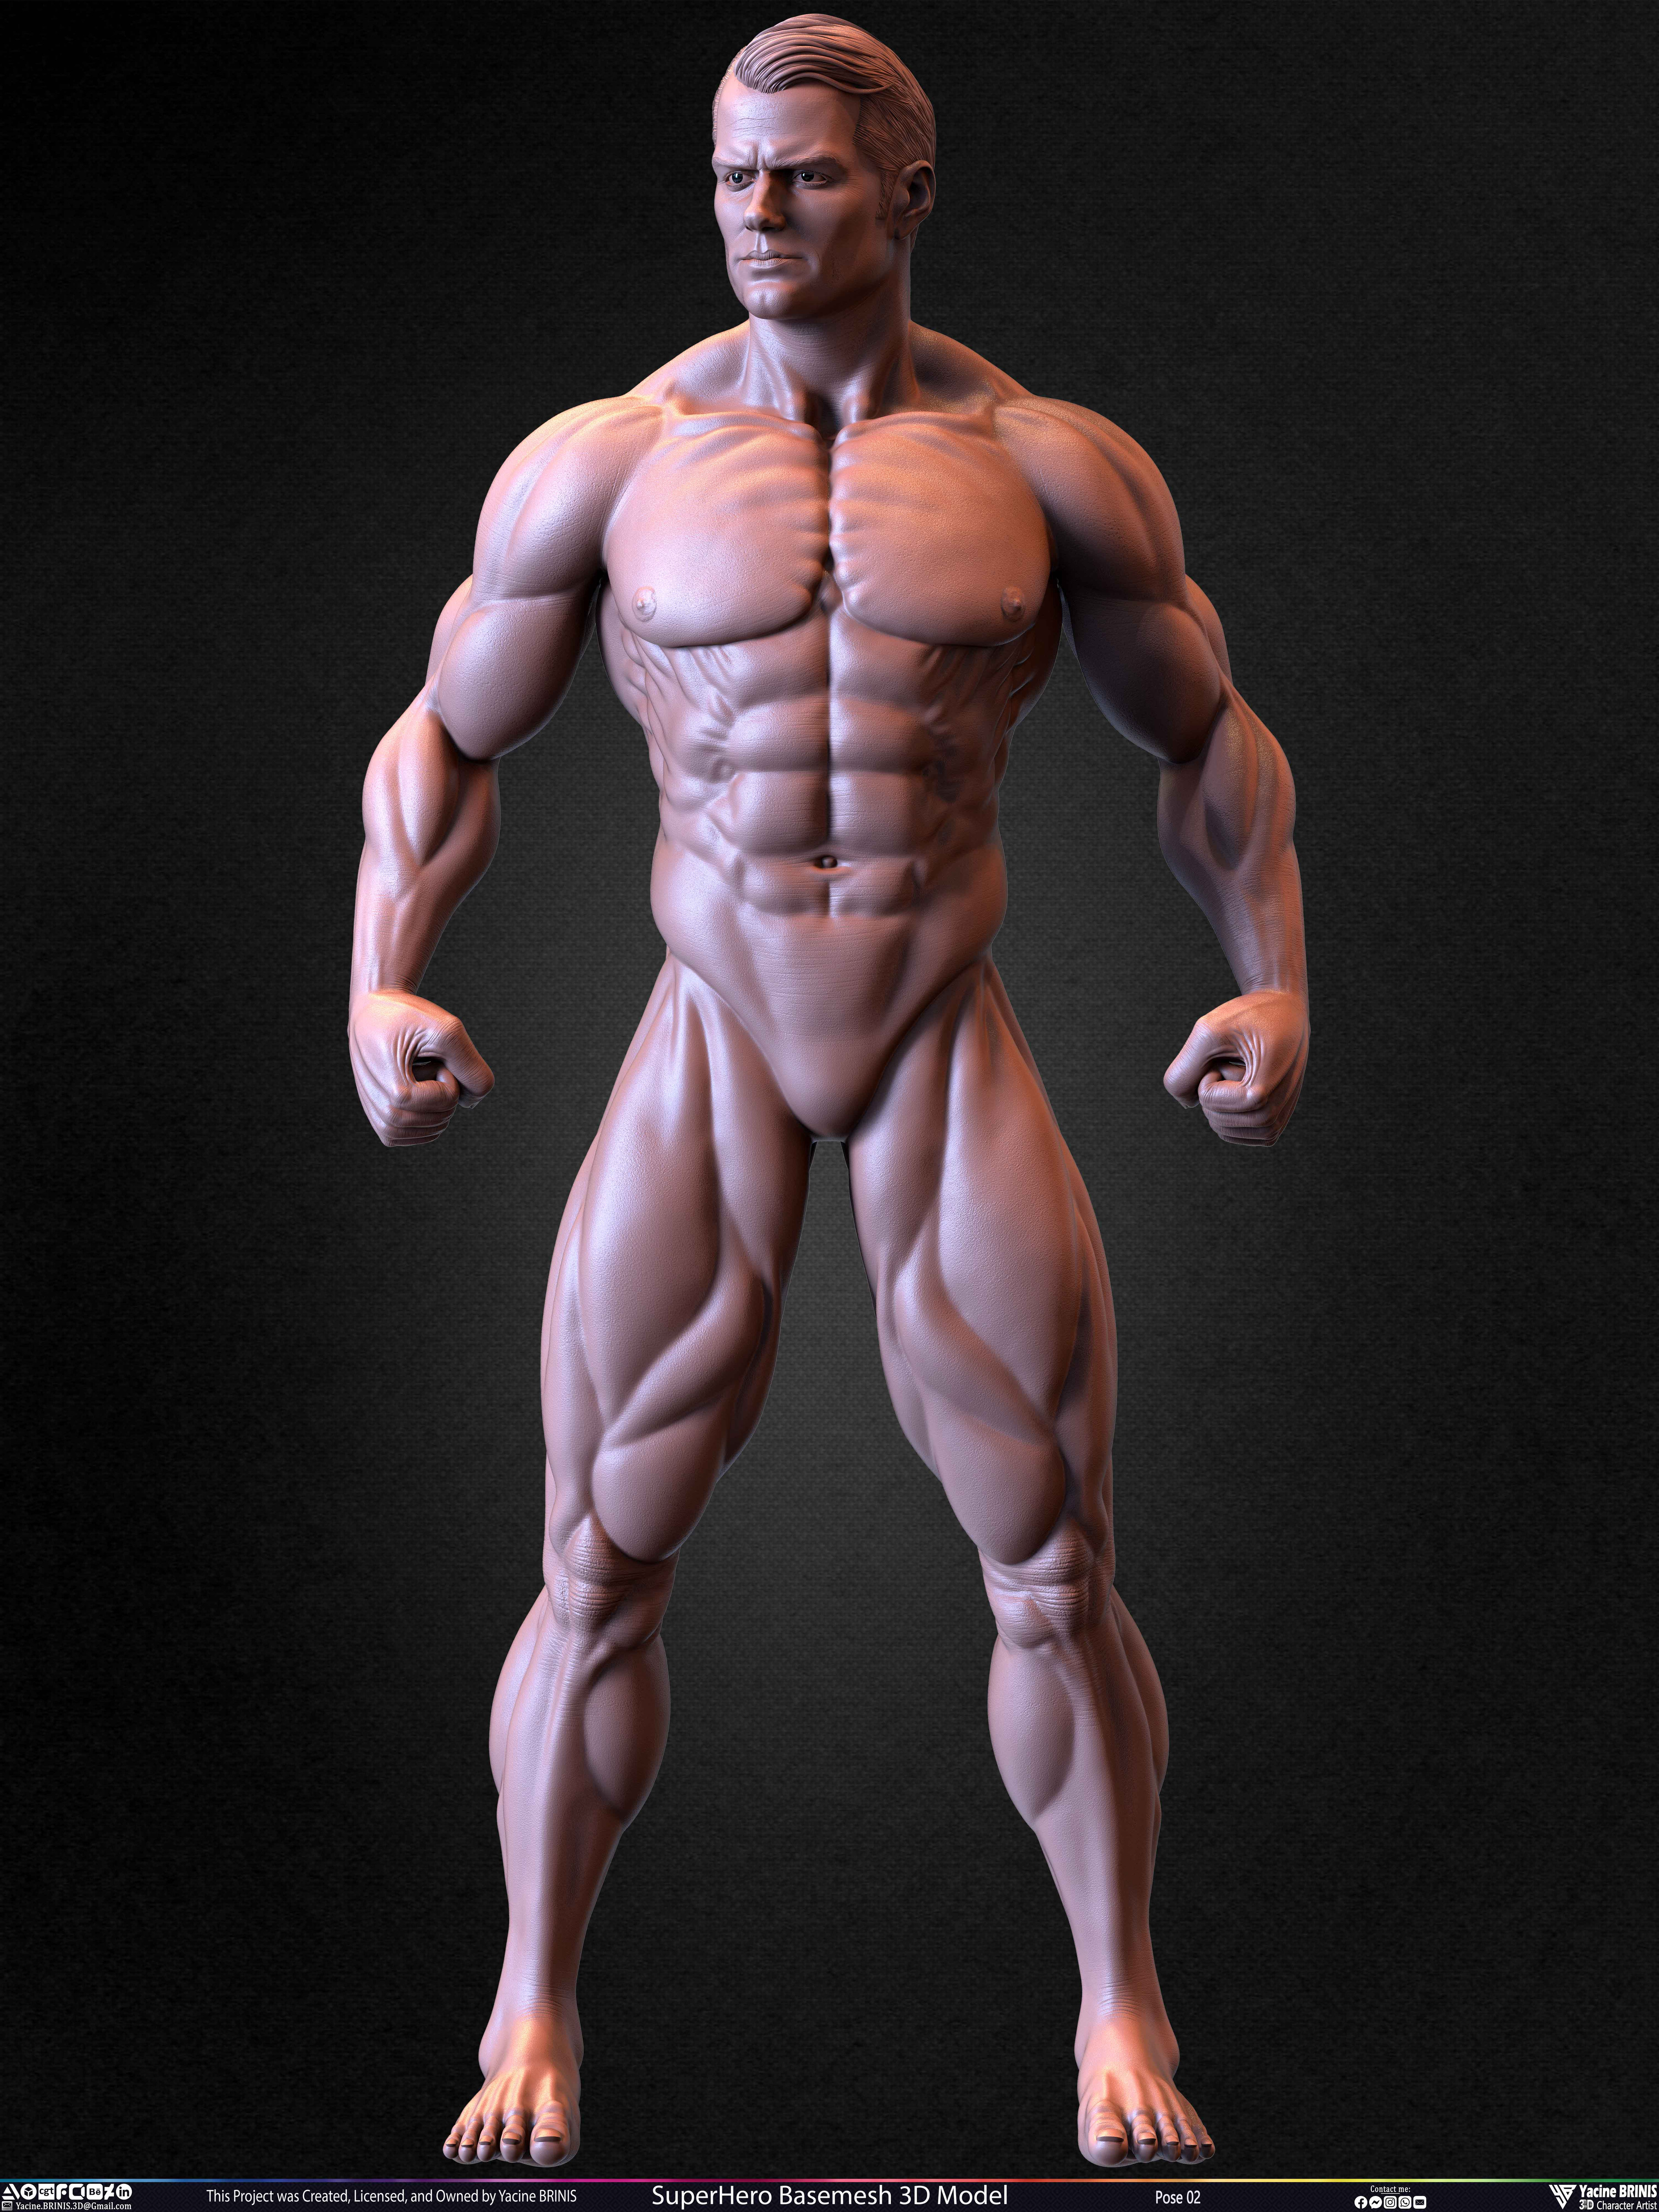 Super-Hero Basemesh 3D Model - Henry Cavill- Man of Steel - Superman - Pose 02 Sculpted by Yacine BRINIS Set 023